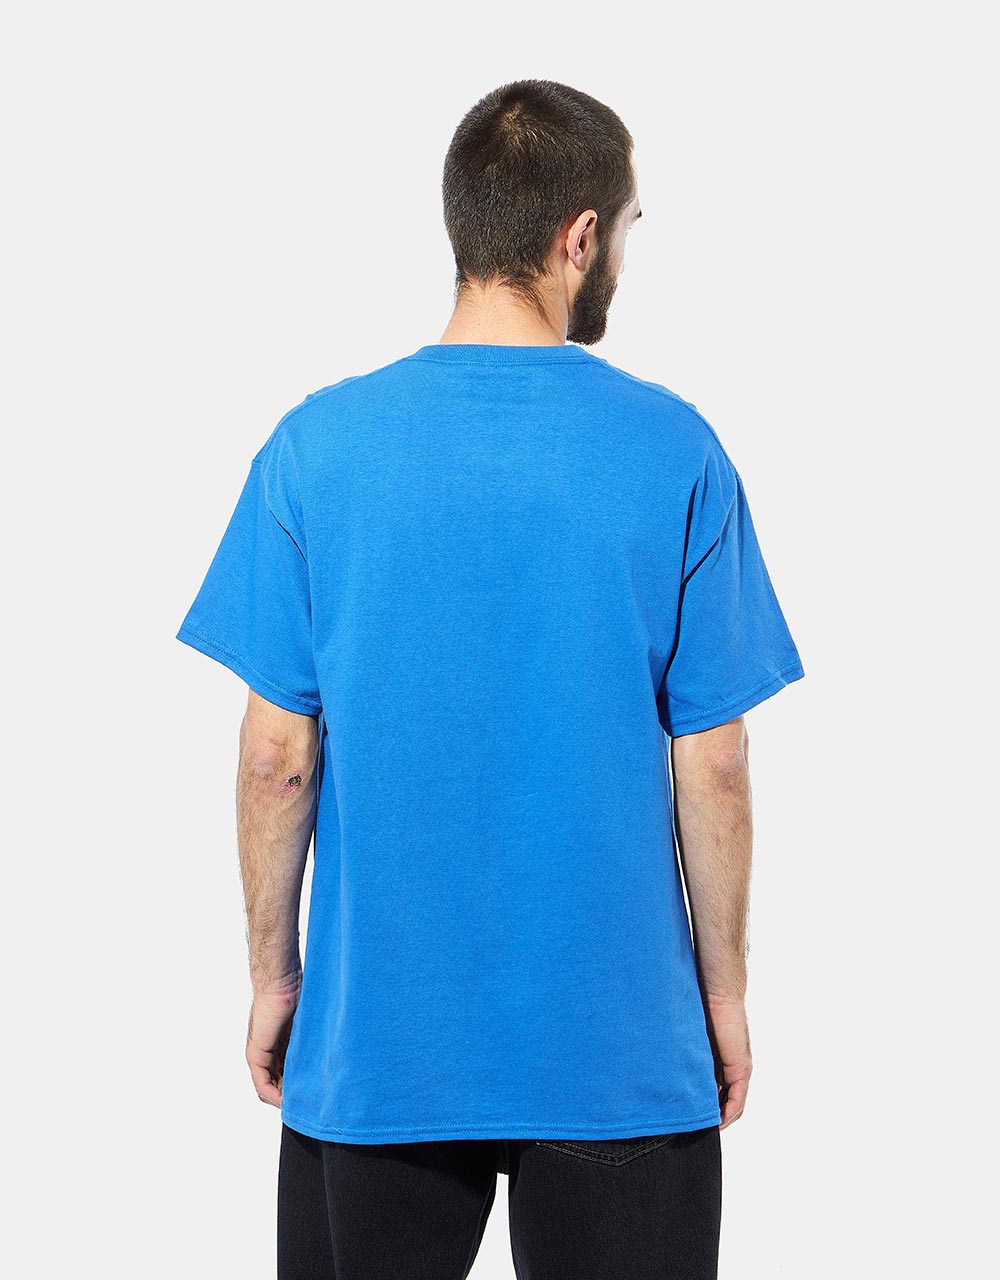 Venture Awake T-Shirt - Royal/White/Orange/Blue